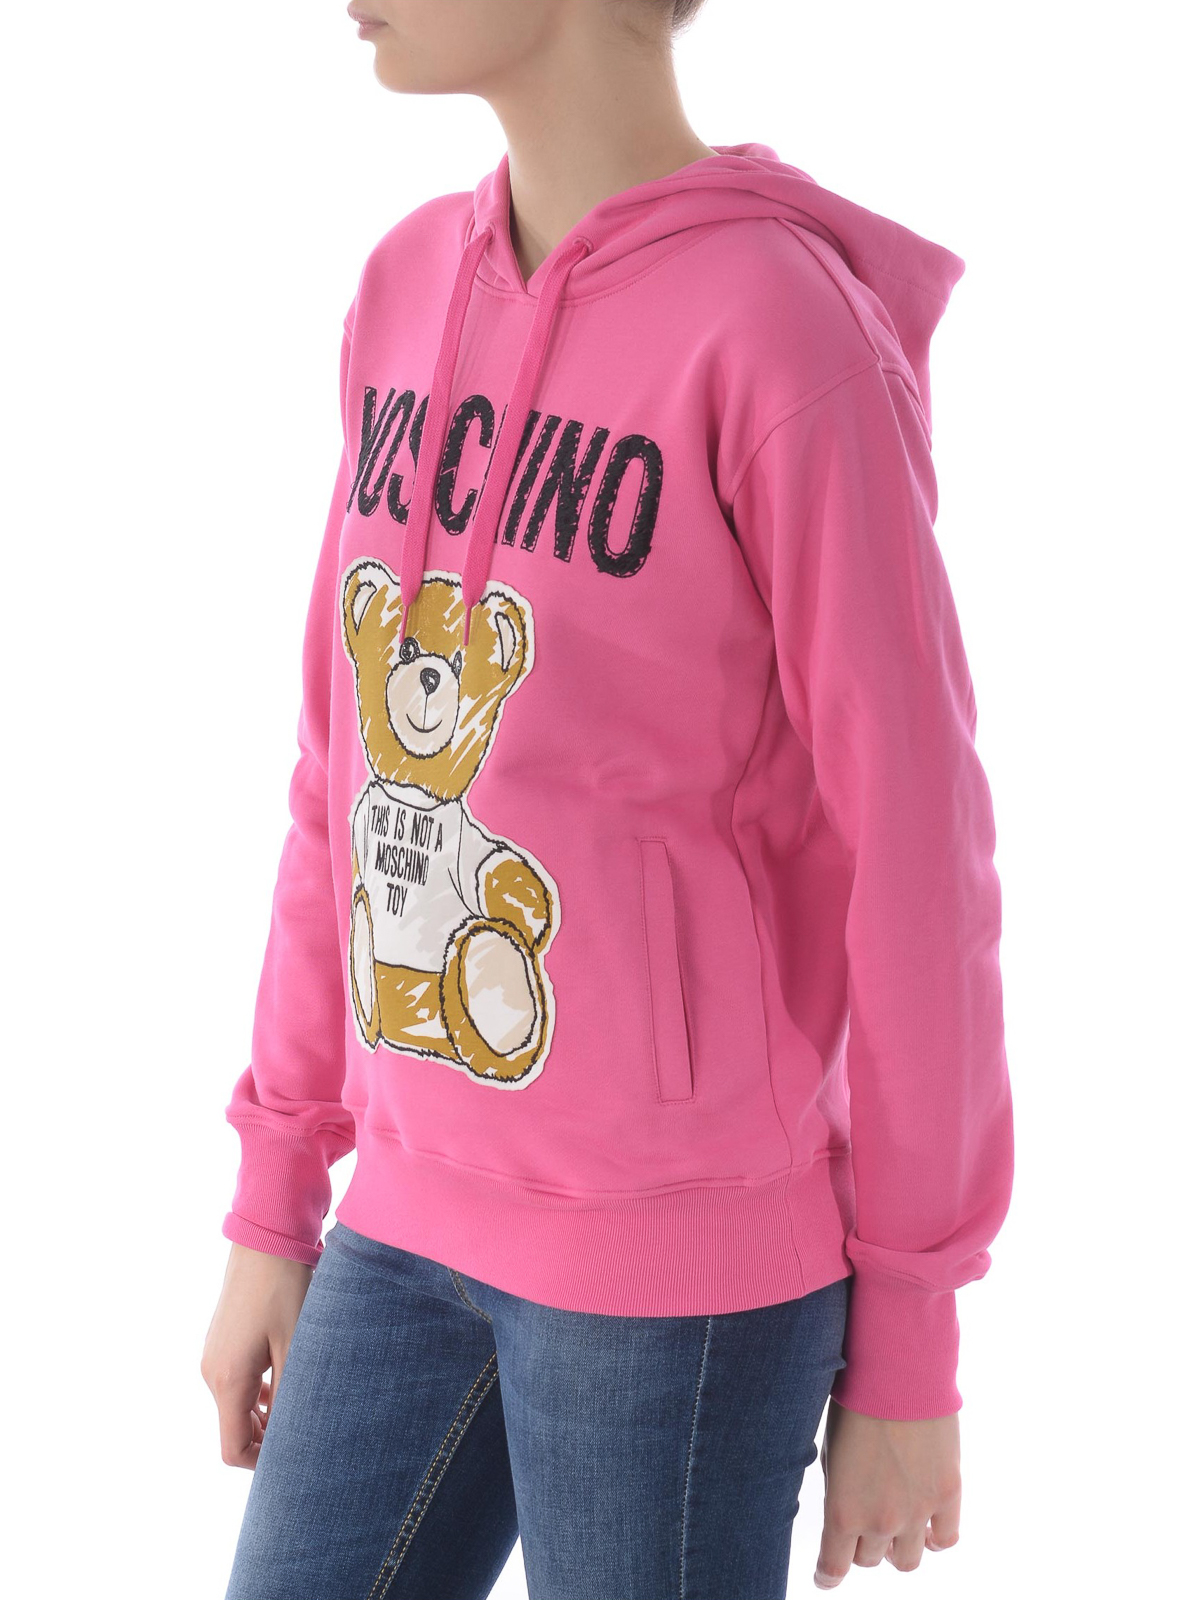 moschino pink hoodie